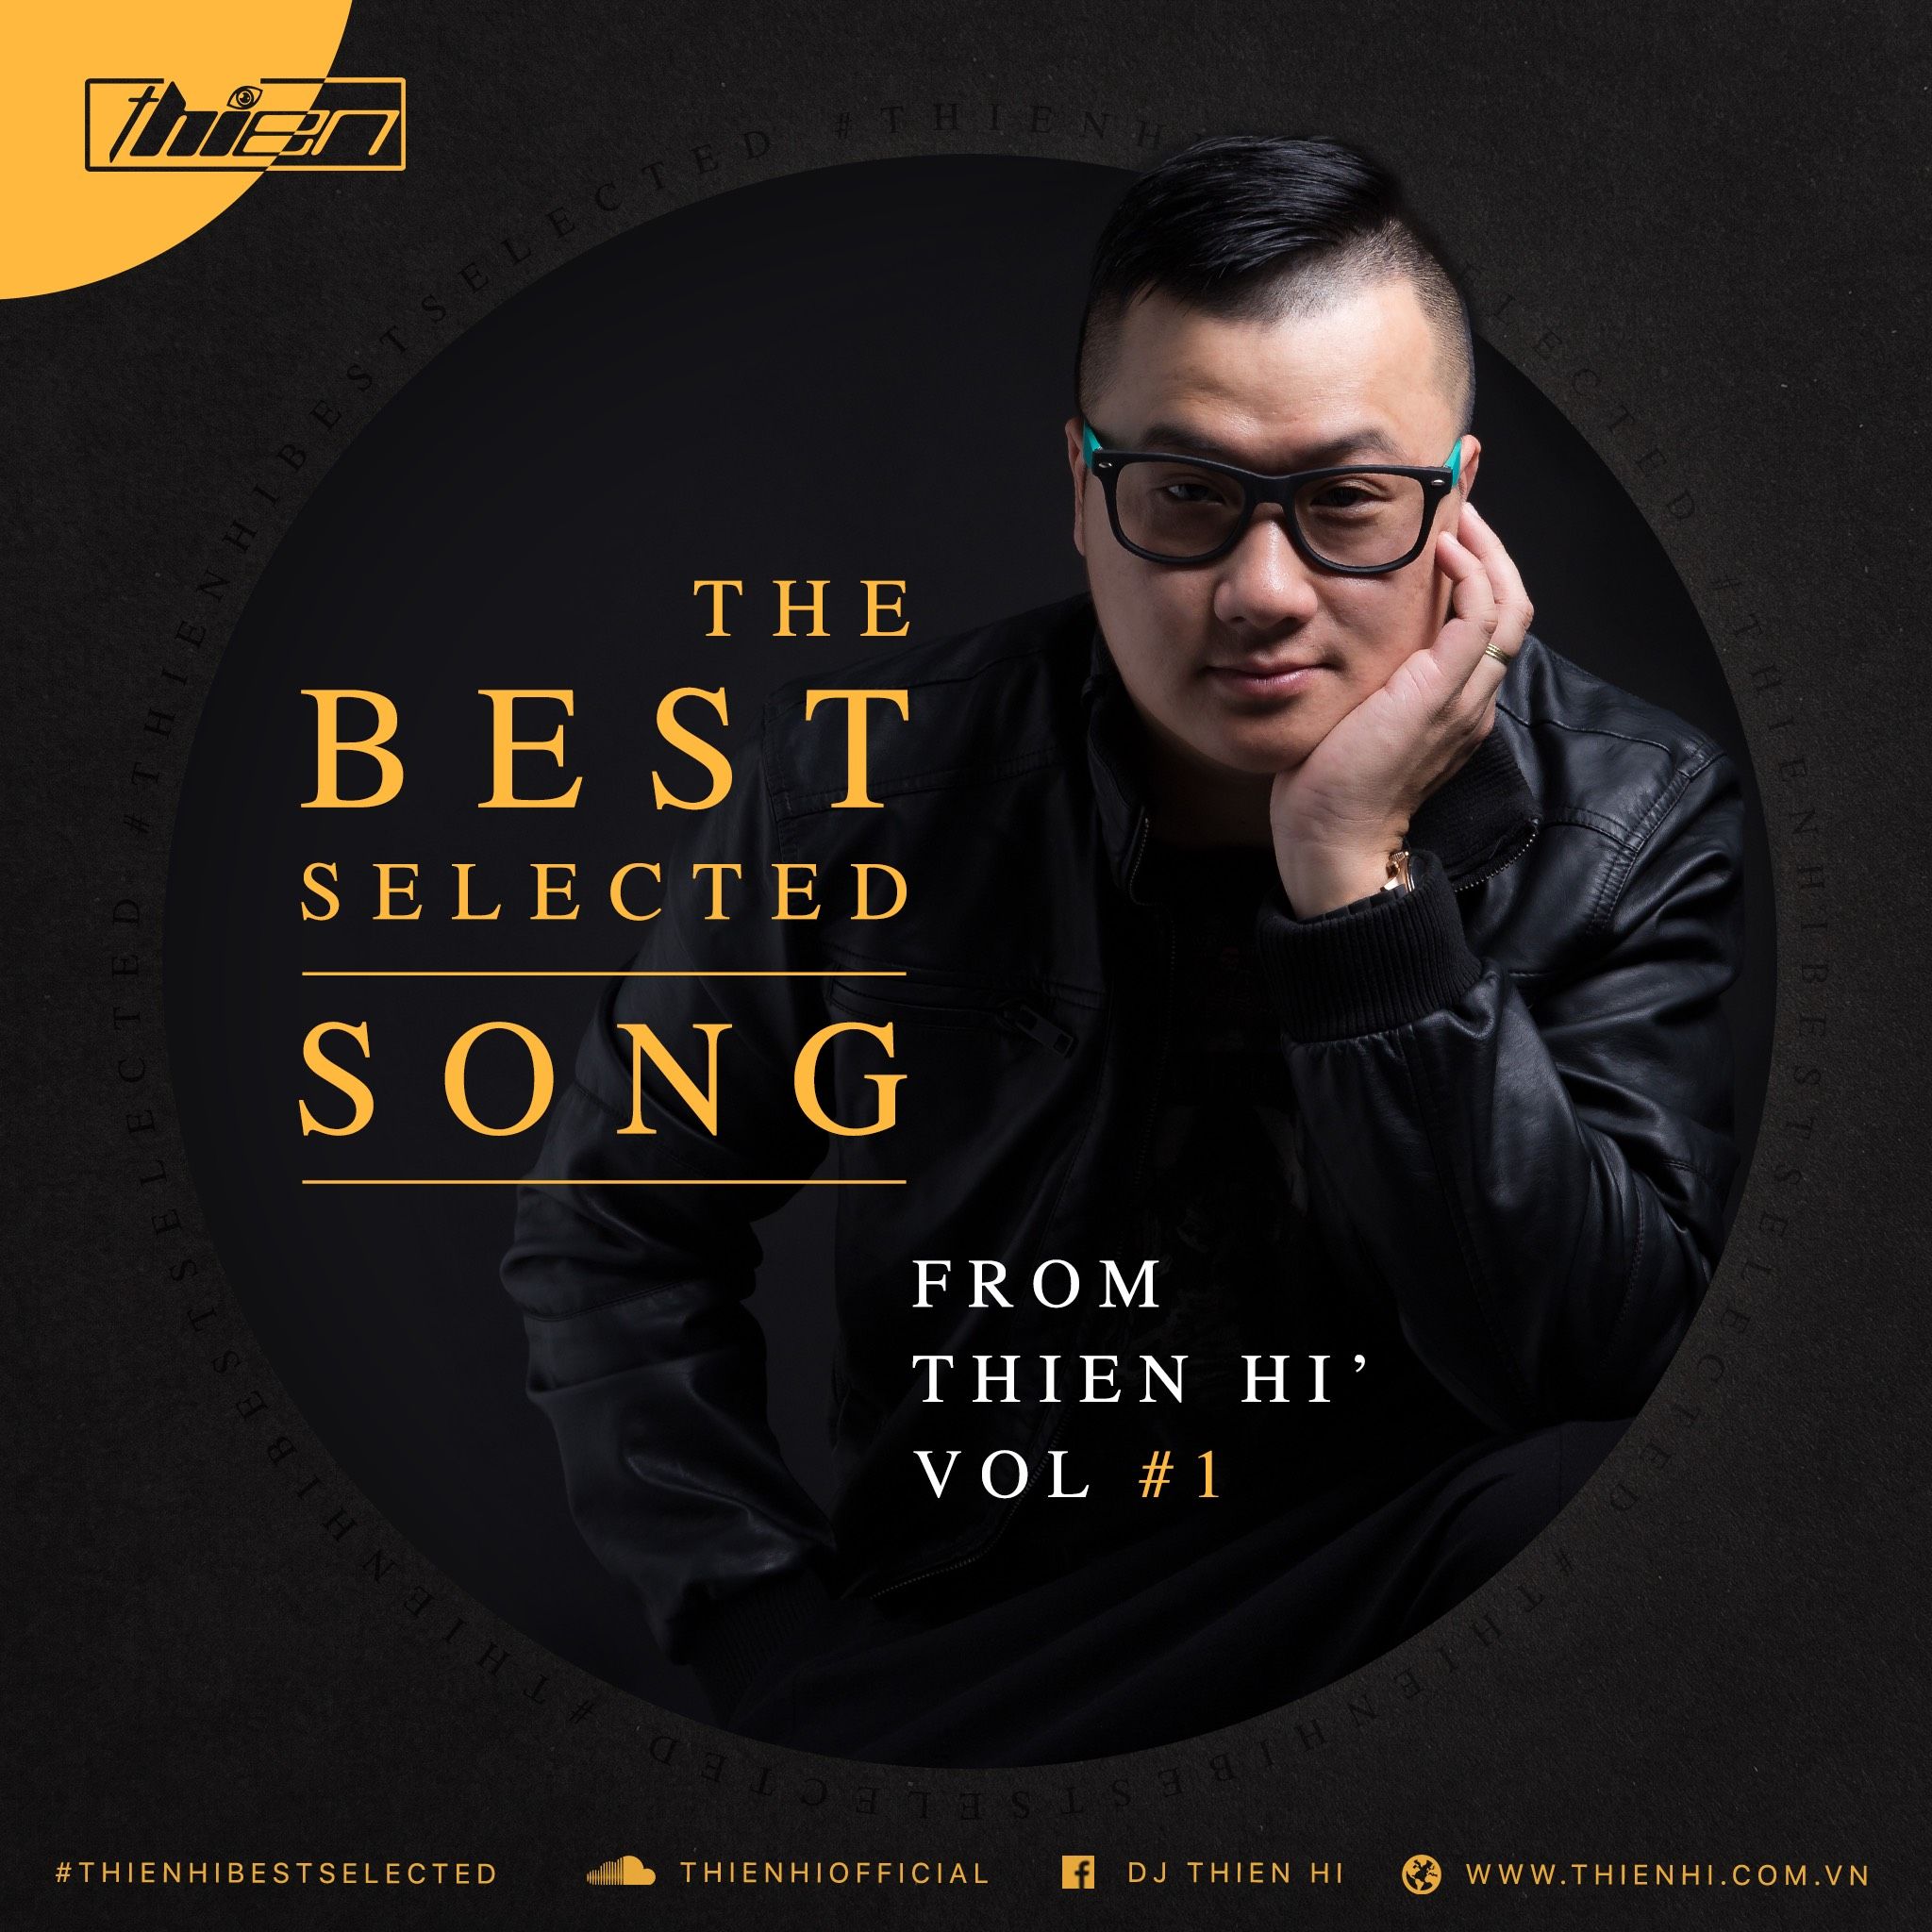 Preuzimanje datoteka Thien Hi - The Best Selected Song #1